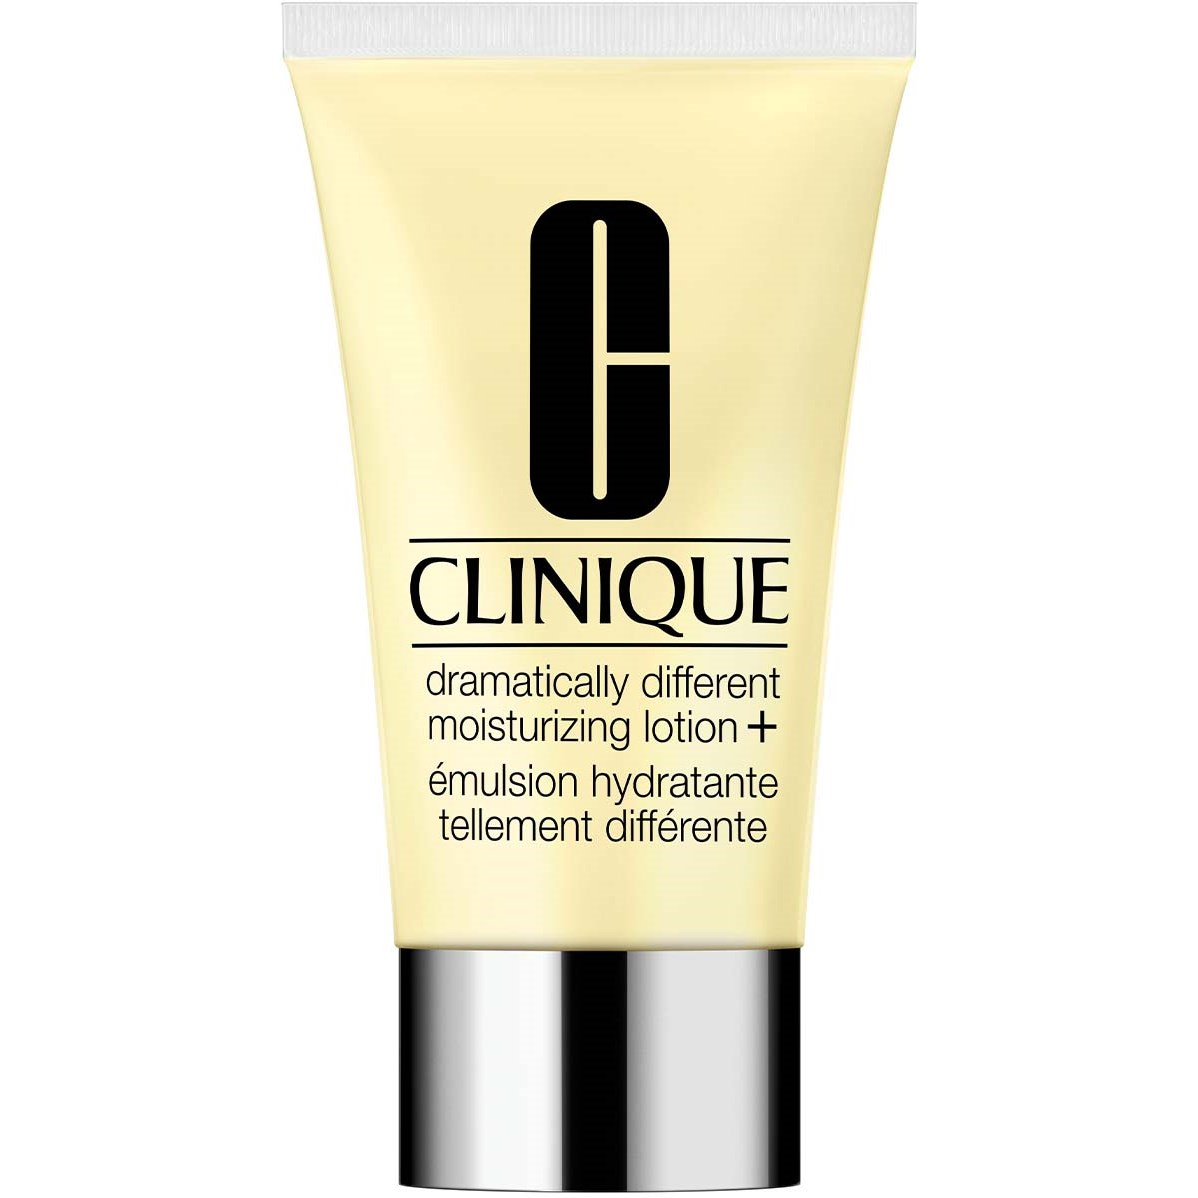 Bilde av Clinique 3-step Dramatically Different Moisturizing Lotion+ Face Cream